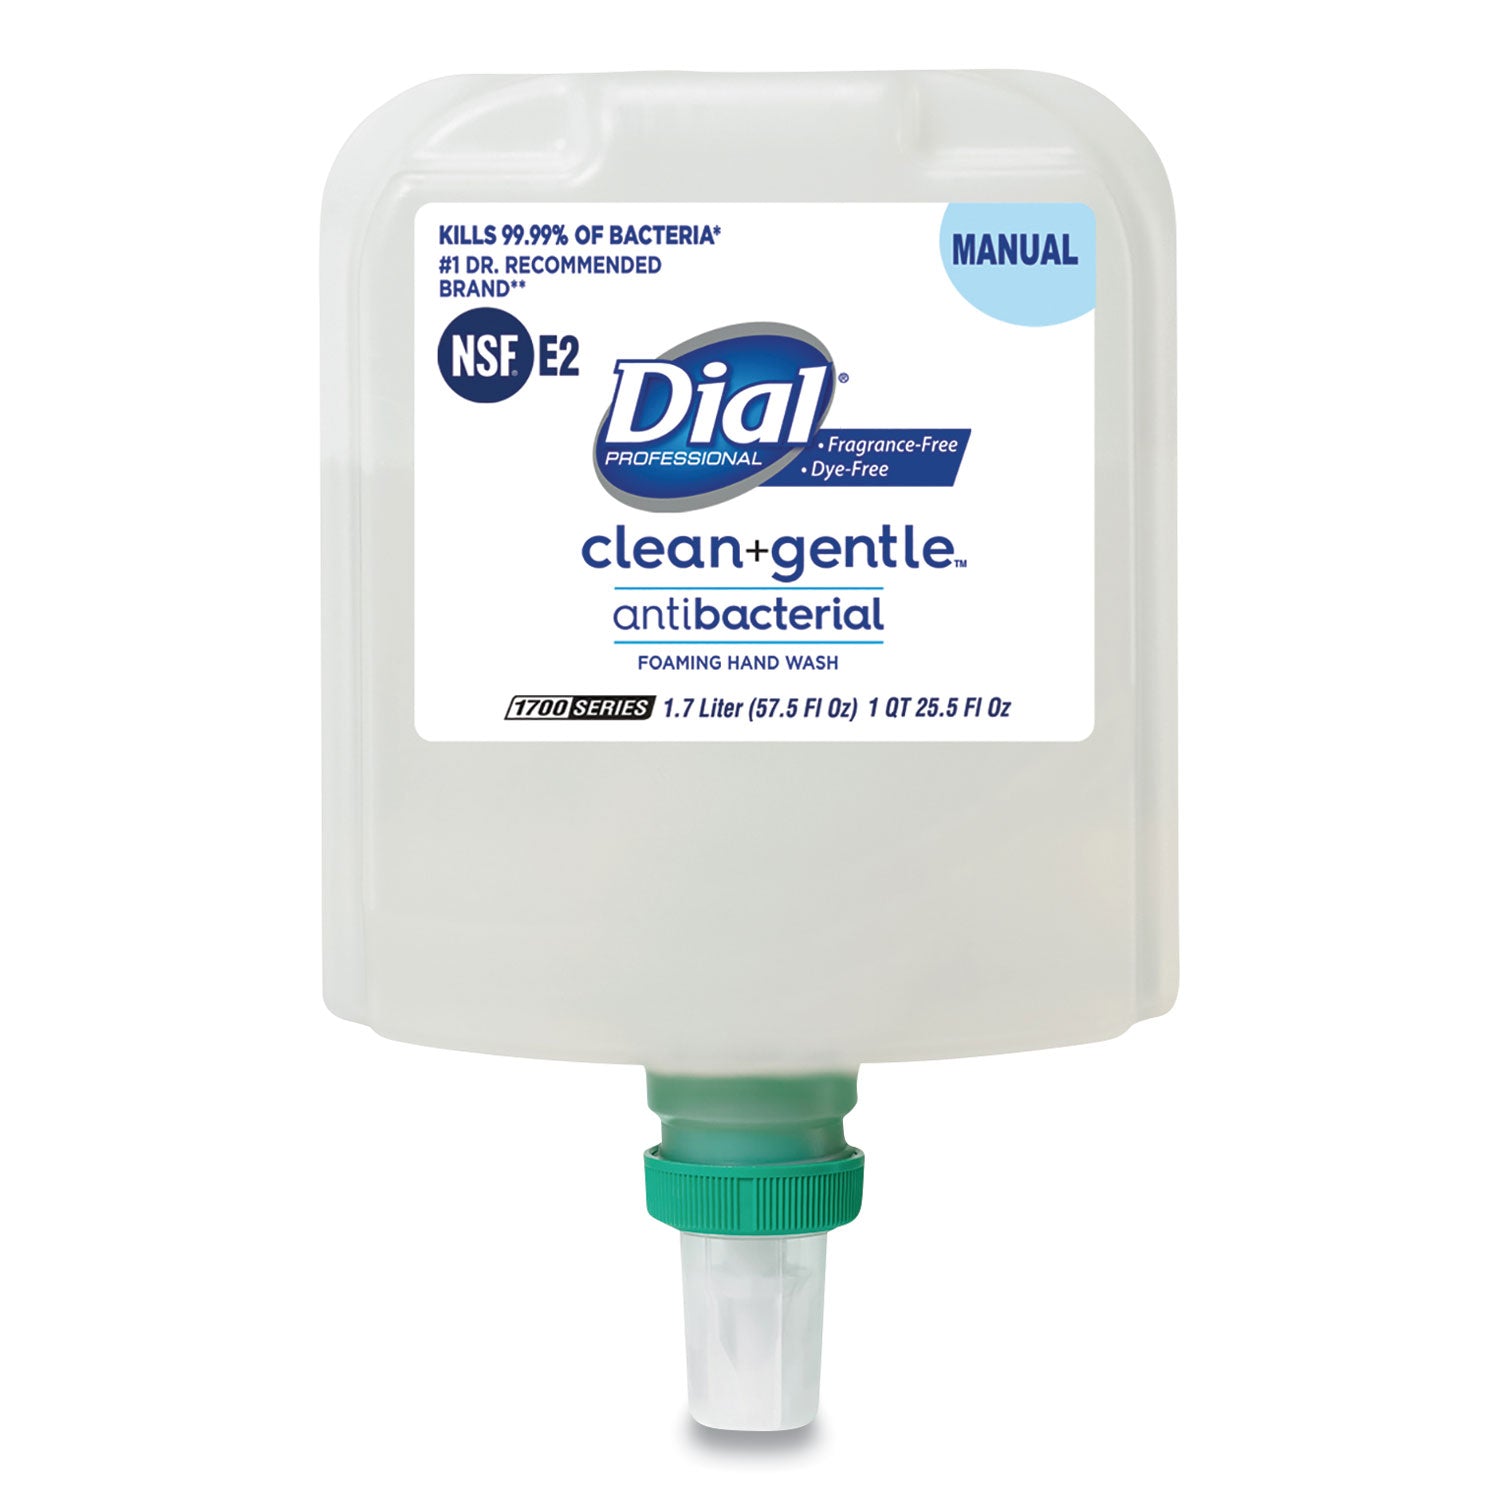 clean+gentle-antibacterial-foaming-hand-wash-refill-for-dial-1700-dispenser-fragrance-free-17-l-3-carton_dia32094 - 1